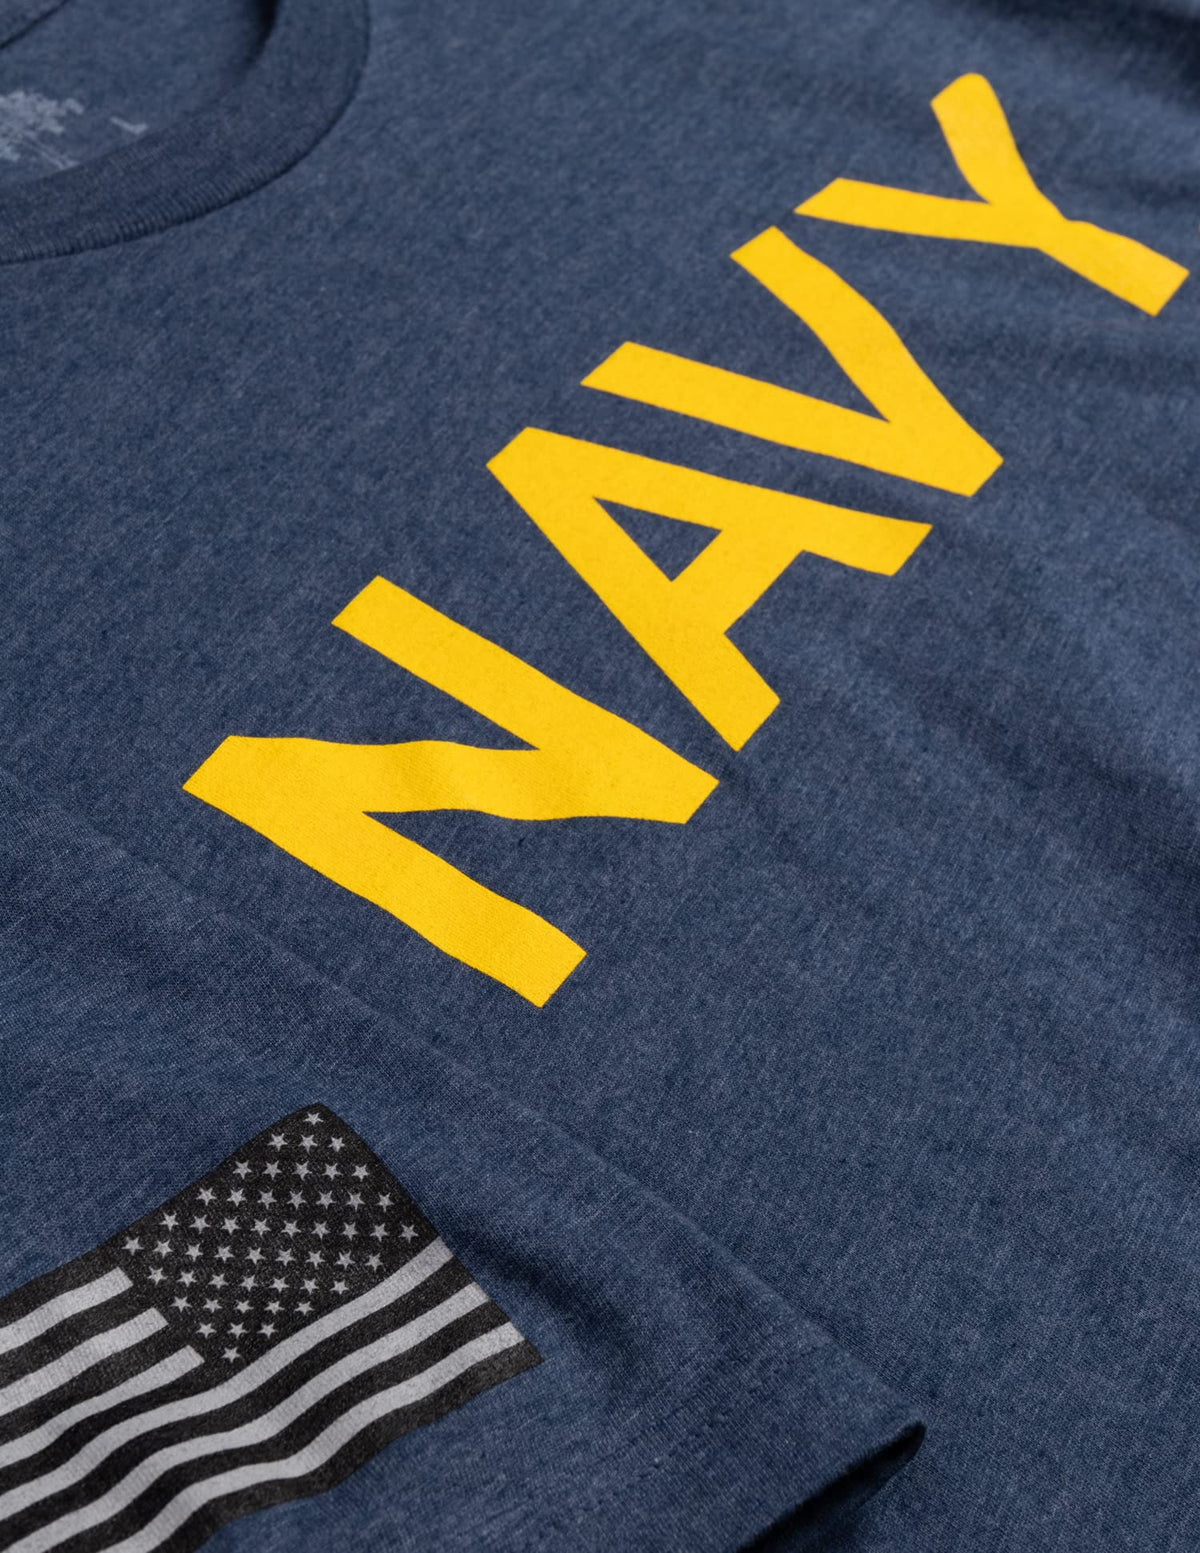 USS Delbert D. Black, DDG-119 | U.S. Navy Sailor Veteran USN United States Naval T-shirt for Men Women